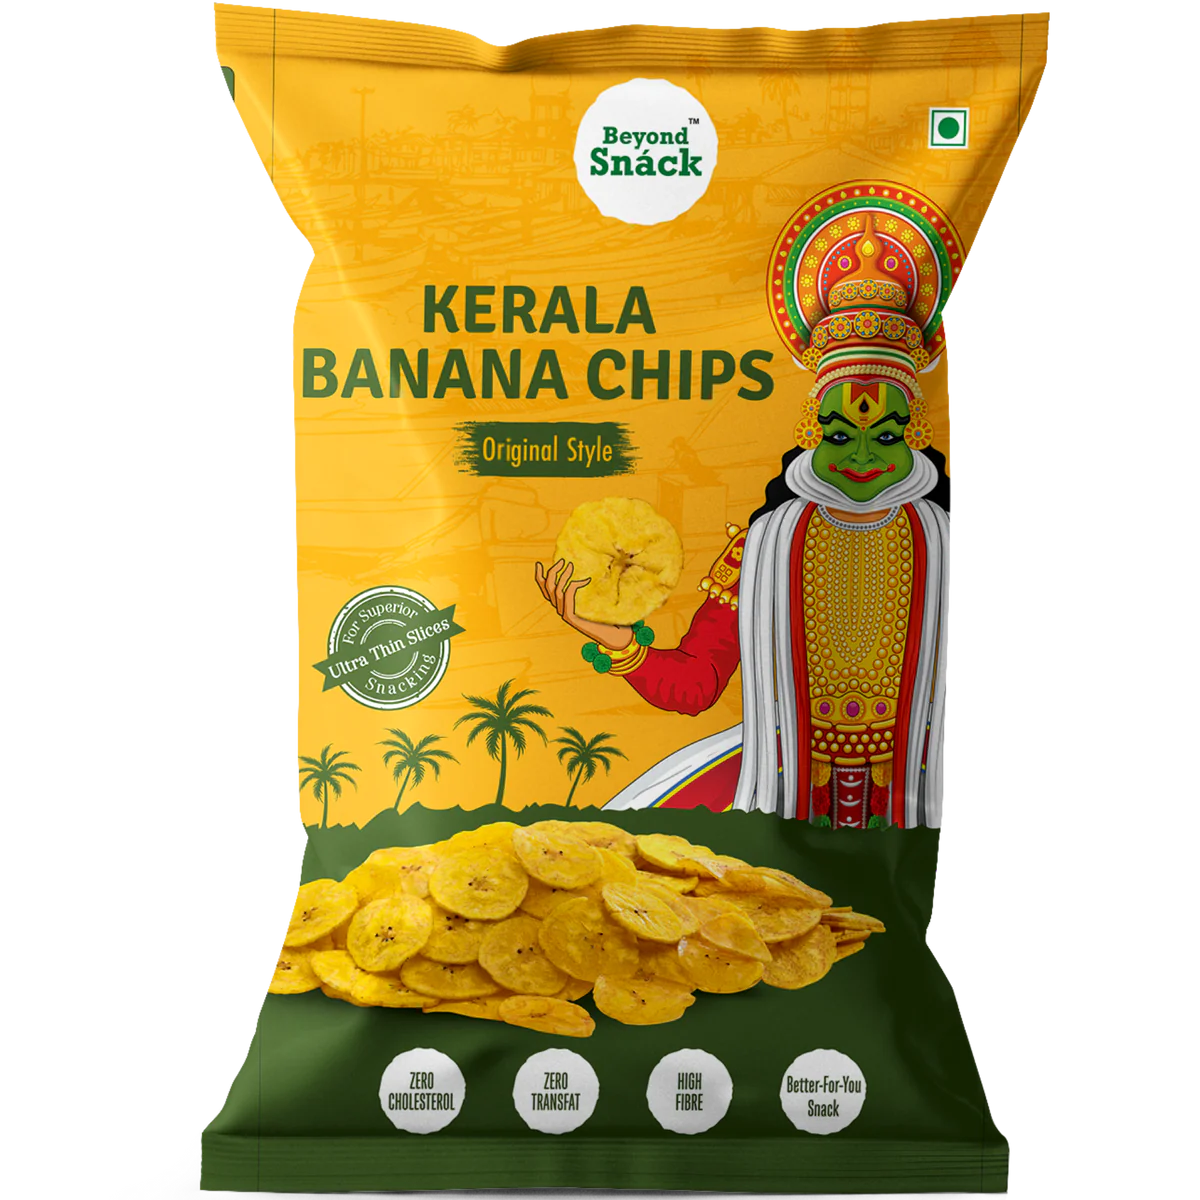 Beyond Snack Kerala Banana Original Style Chips Image